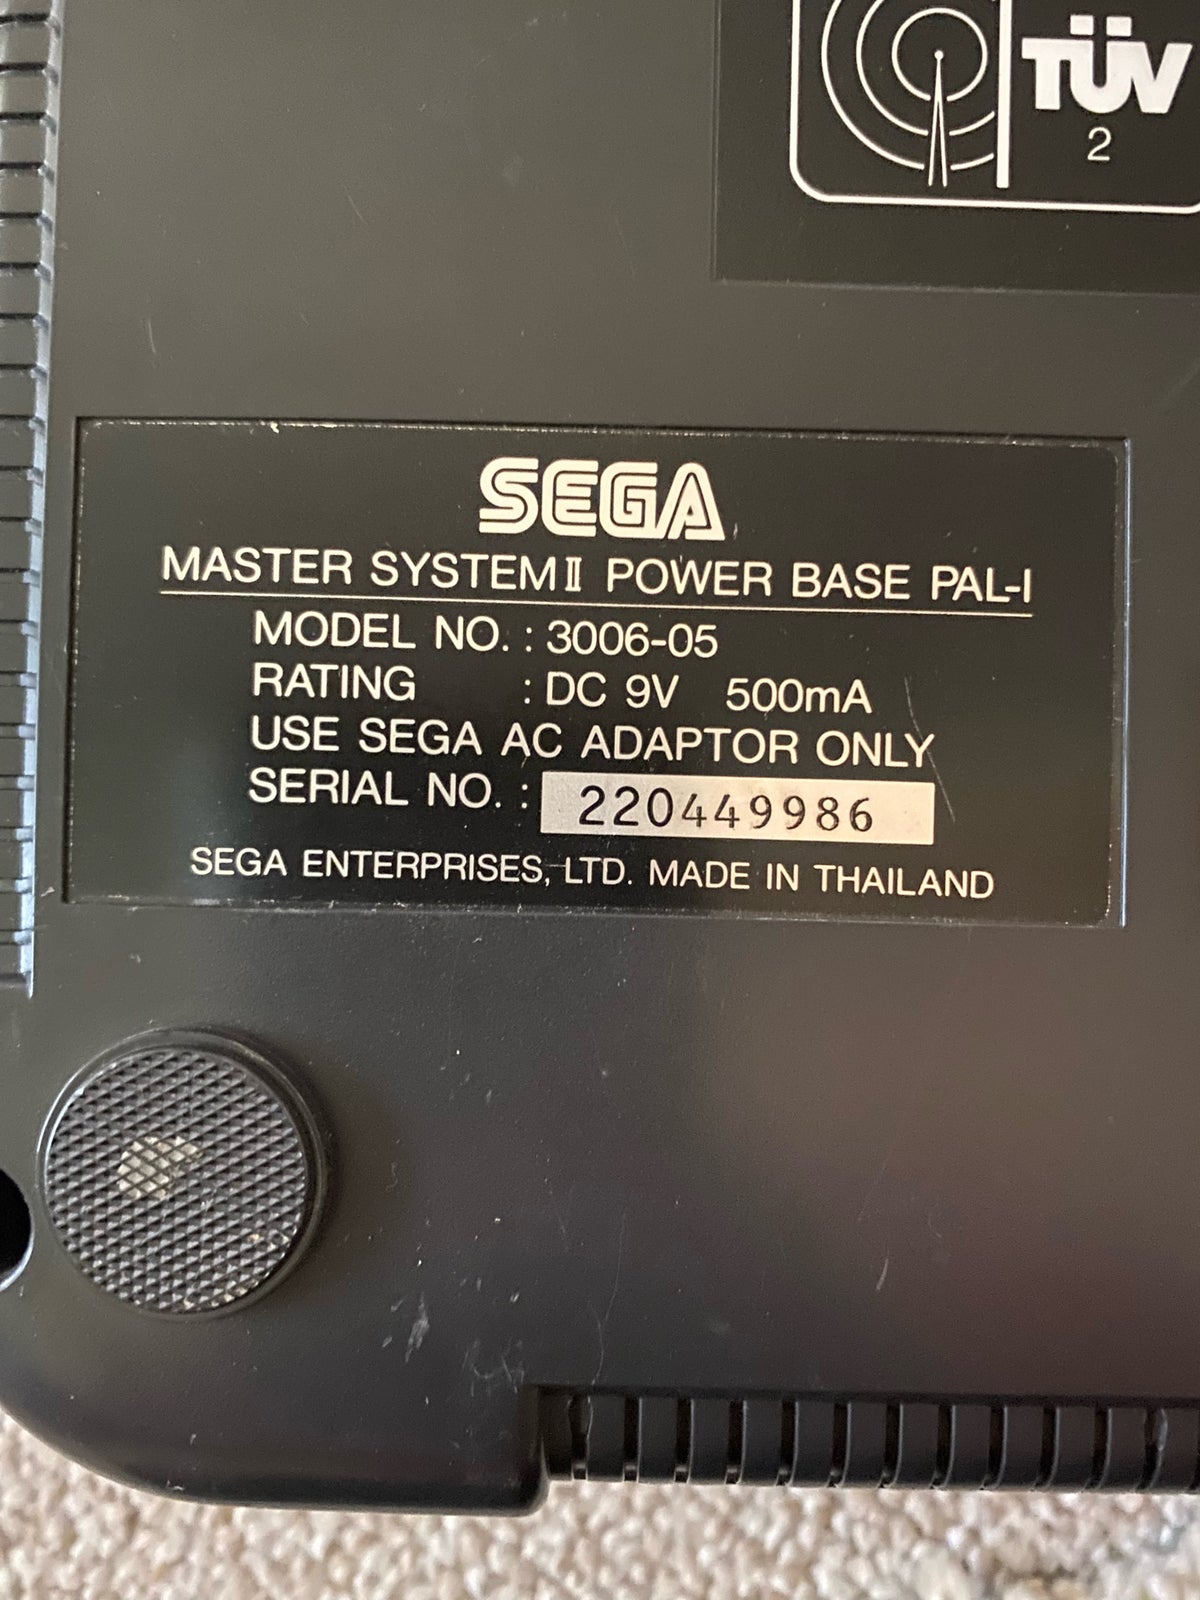 Sega Marstersystem, spillekonsol, God